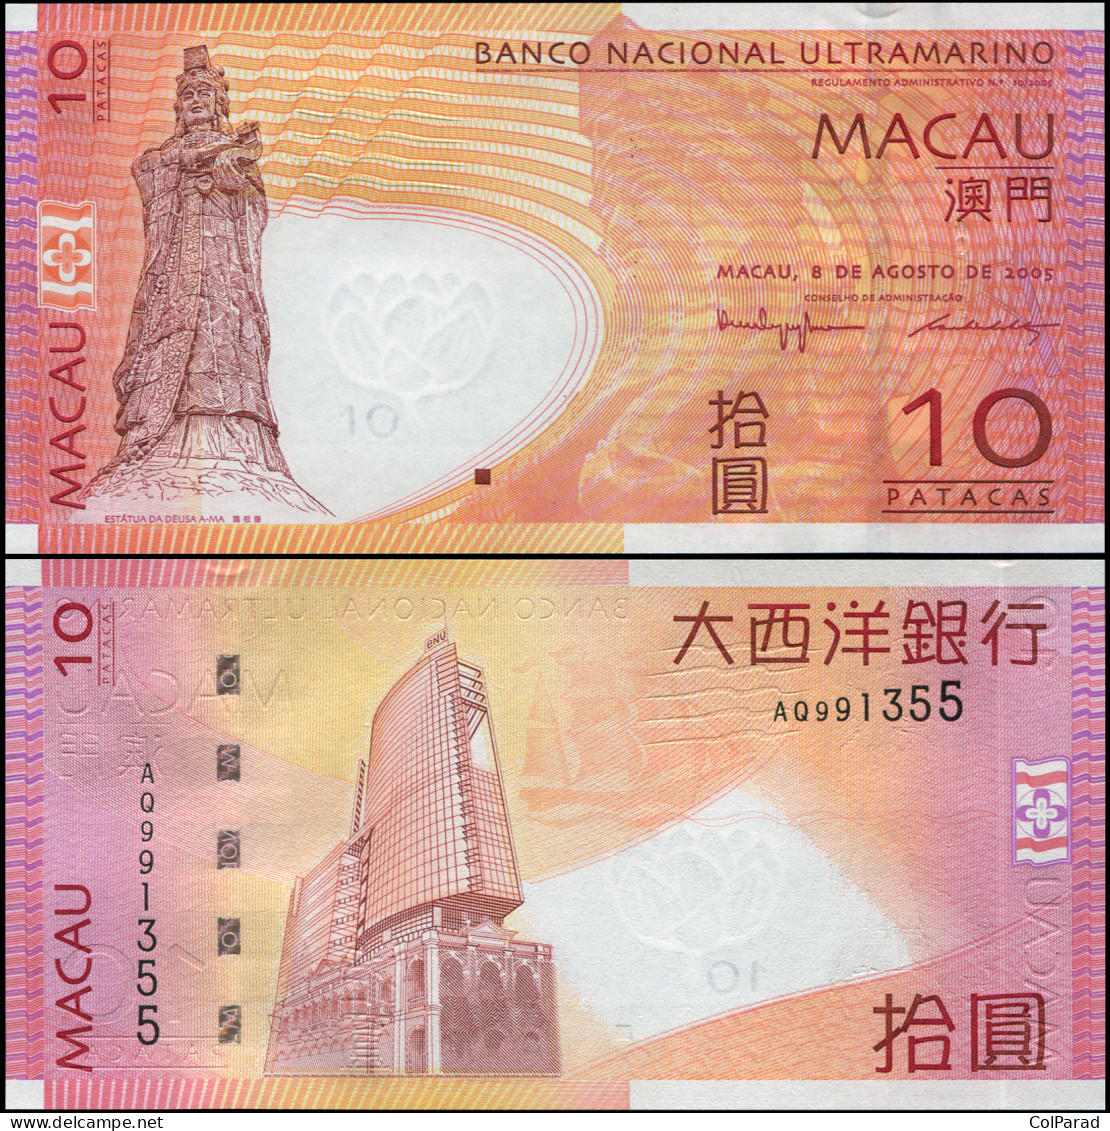 MACAO 10 PATACAS - 08.08.2005 - Paper Unc - P.80a Banknote - Macau